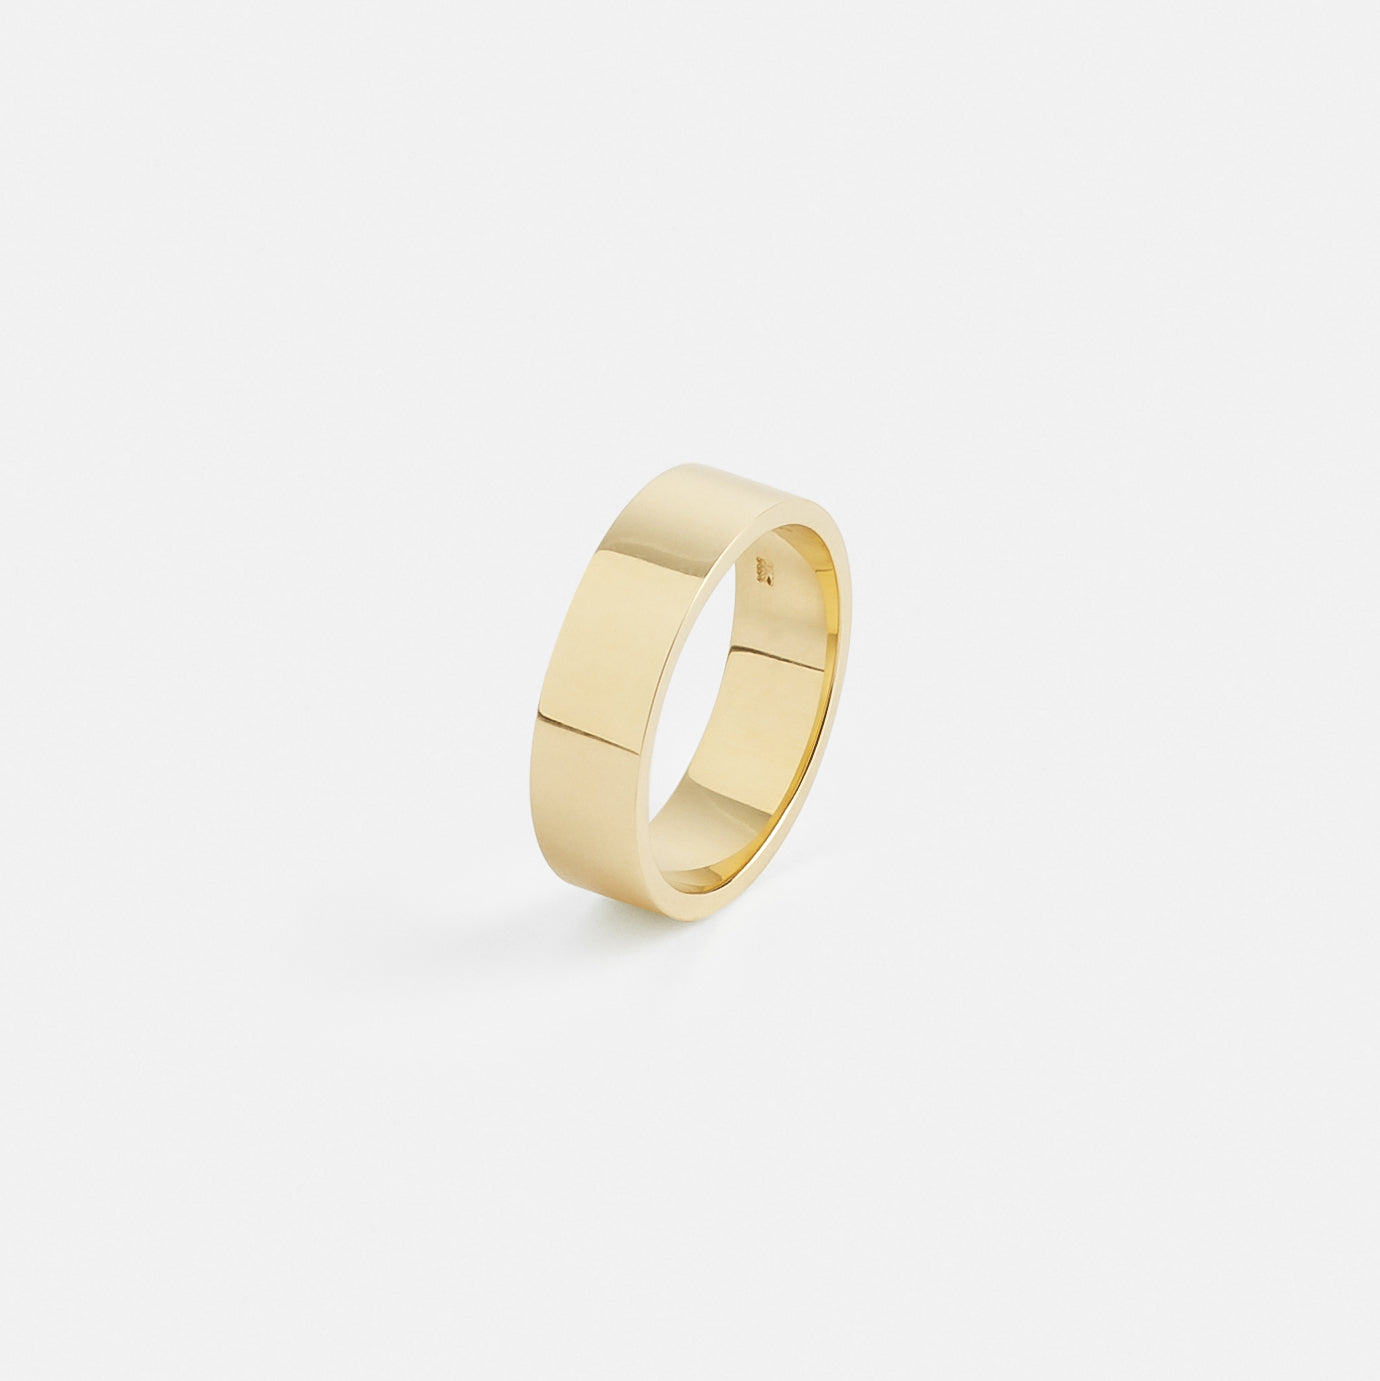 Eldi Unisex Ring in 14k Gold By SHW Fine Jewelry NYC